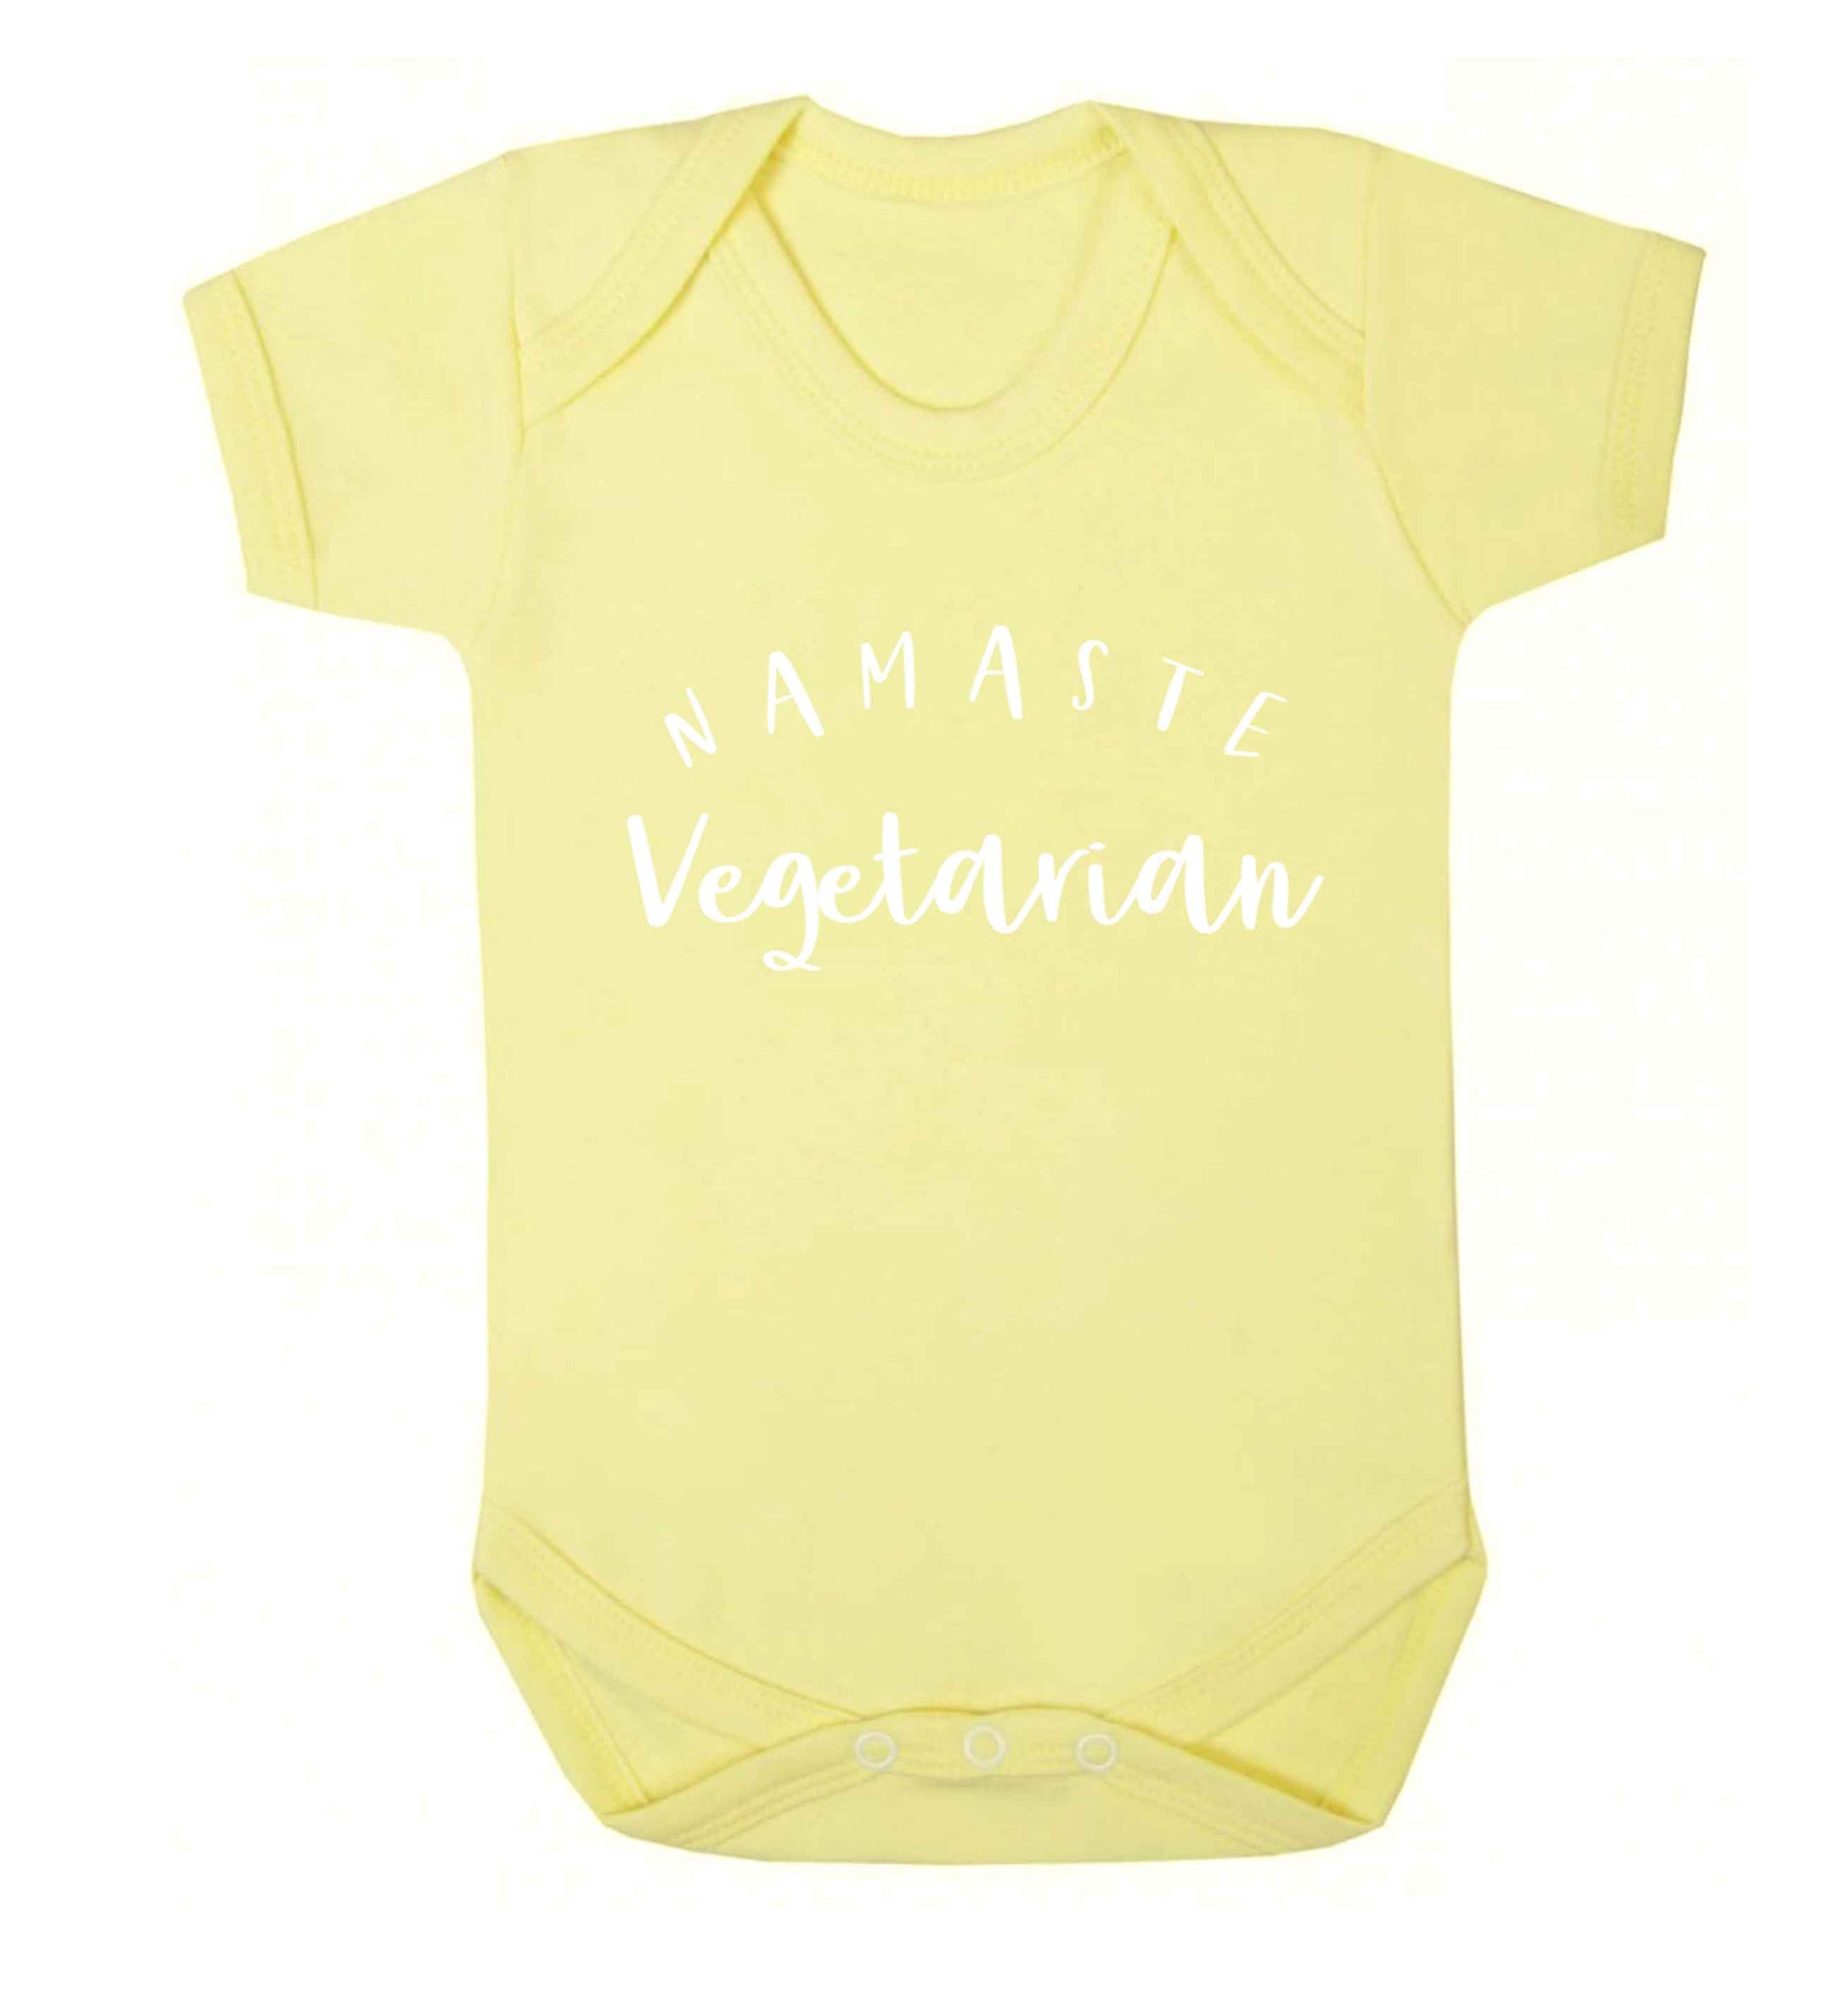 Namaste vegetarian Baby Vest pale yellow 18-24 months